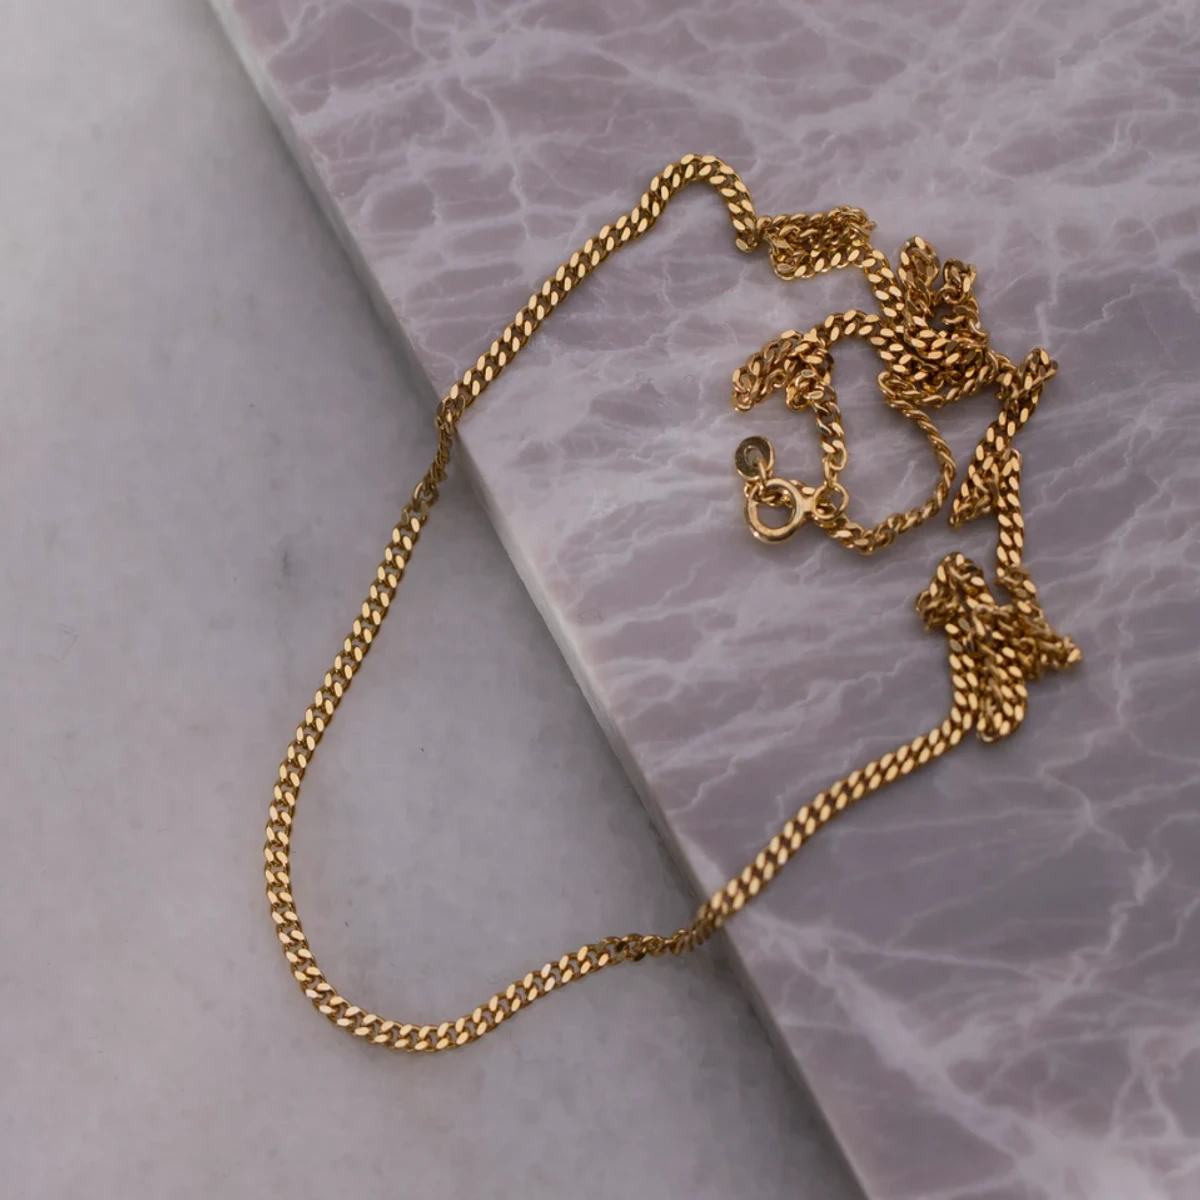 Fashion Jewellery Stylish Chain For Women and Girls